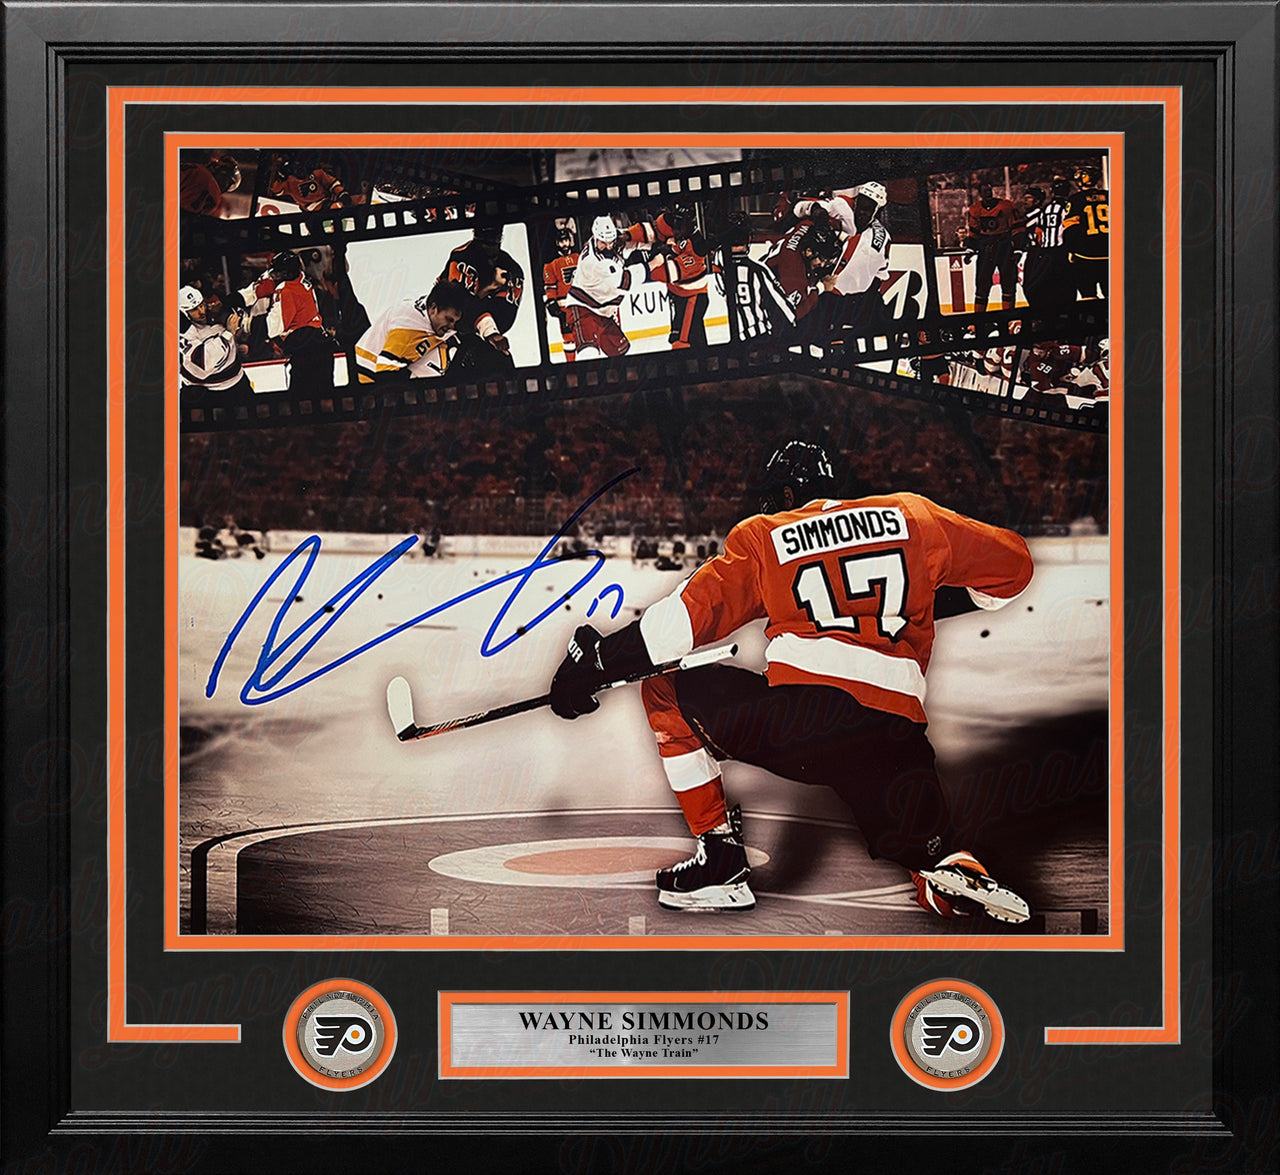 Wayne Simmonds Philadelphia Flyers Autographed 11" x 14" Framed Collage Hockey Photo